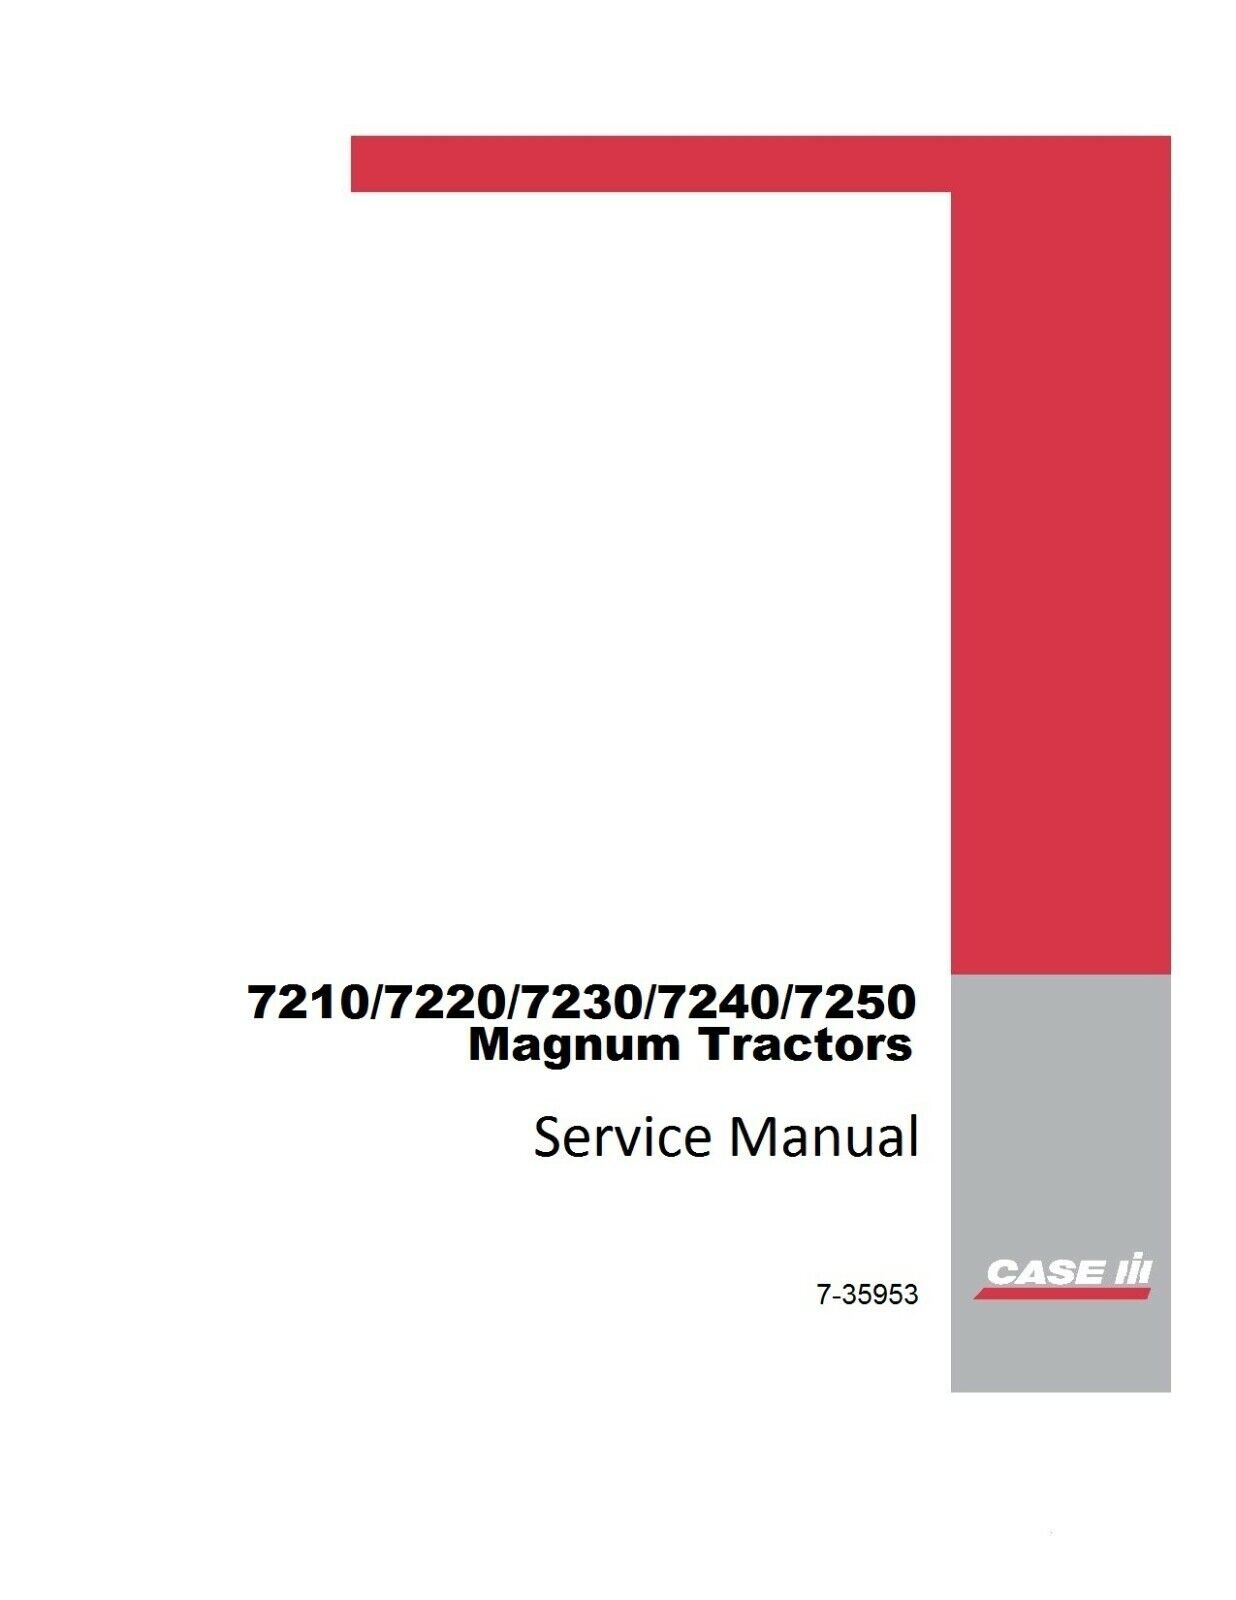 Case IH 7210 7220 7230 7240 7250 Magnum Tractor Service Repair Manual CD